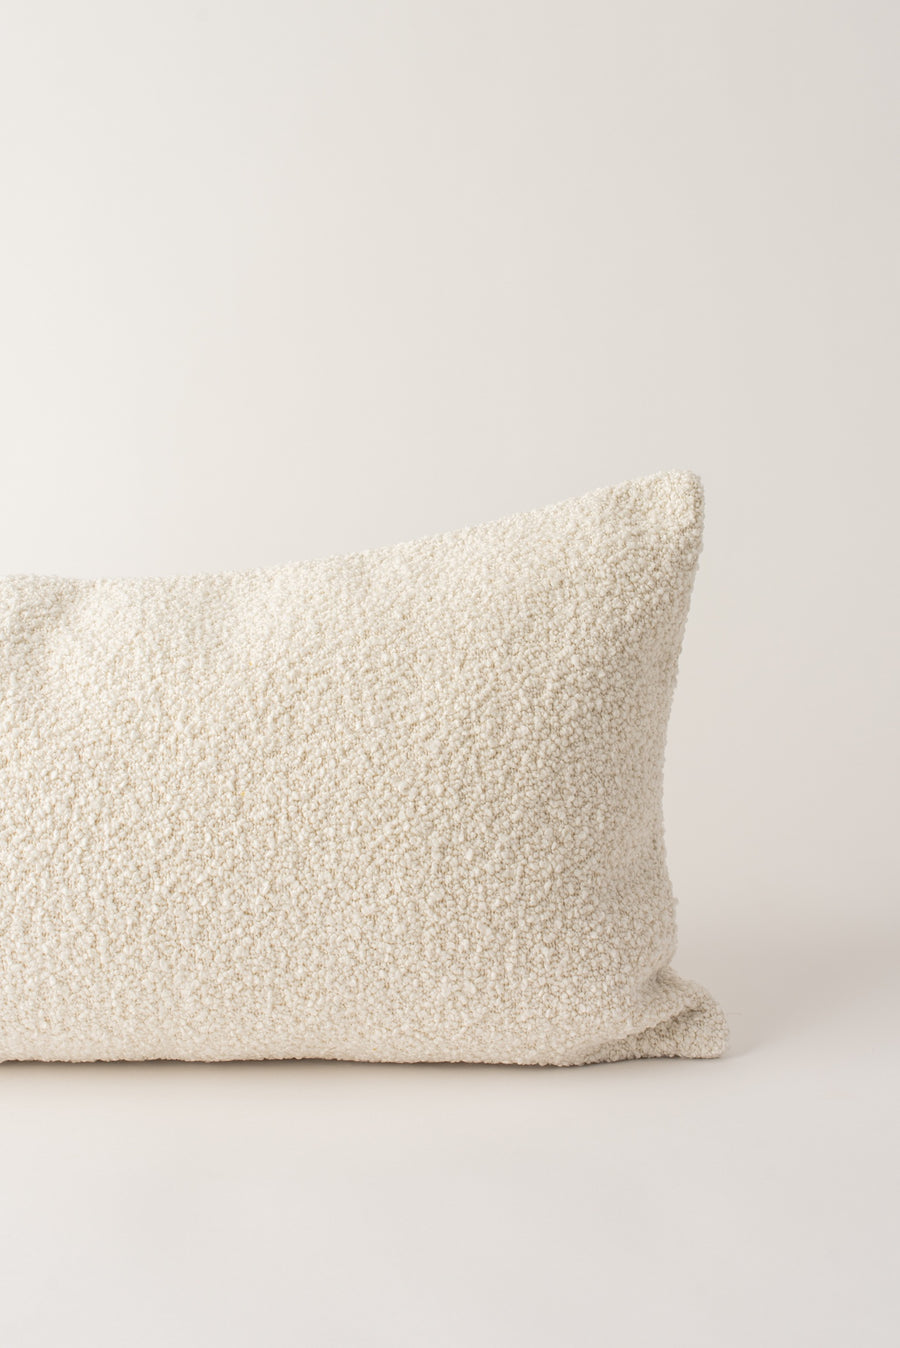 Kindred Cushion - White Boucle Bolster